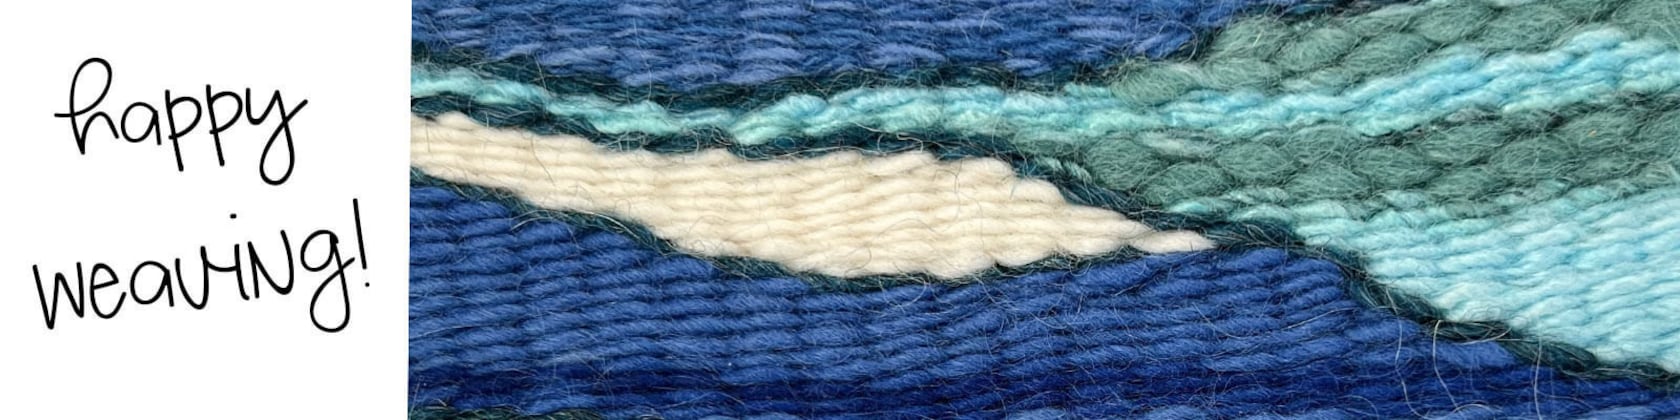 Wood Loom Weaving Kit - Alpaca Yarn - Colors of Autumn - The Creativity  Patch - Lucy Jennings